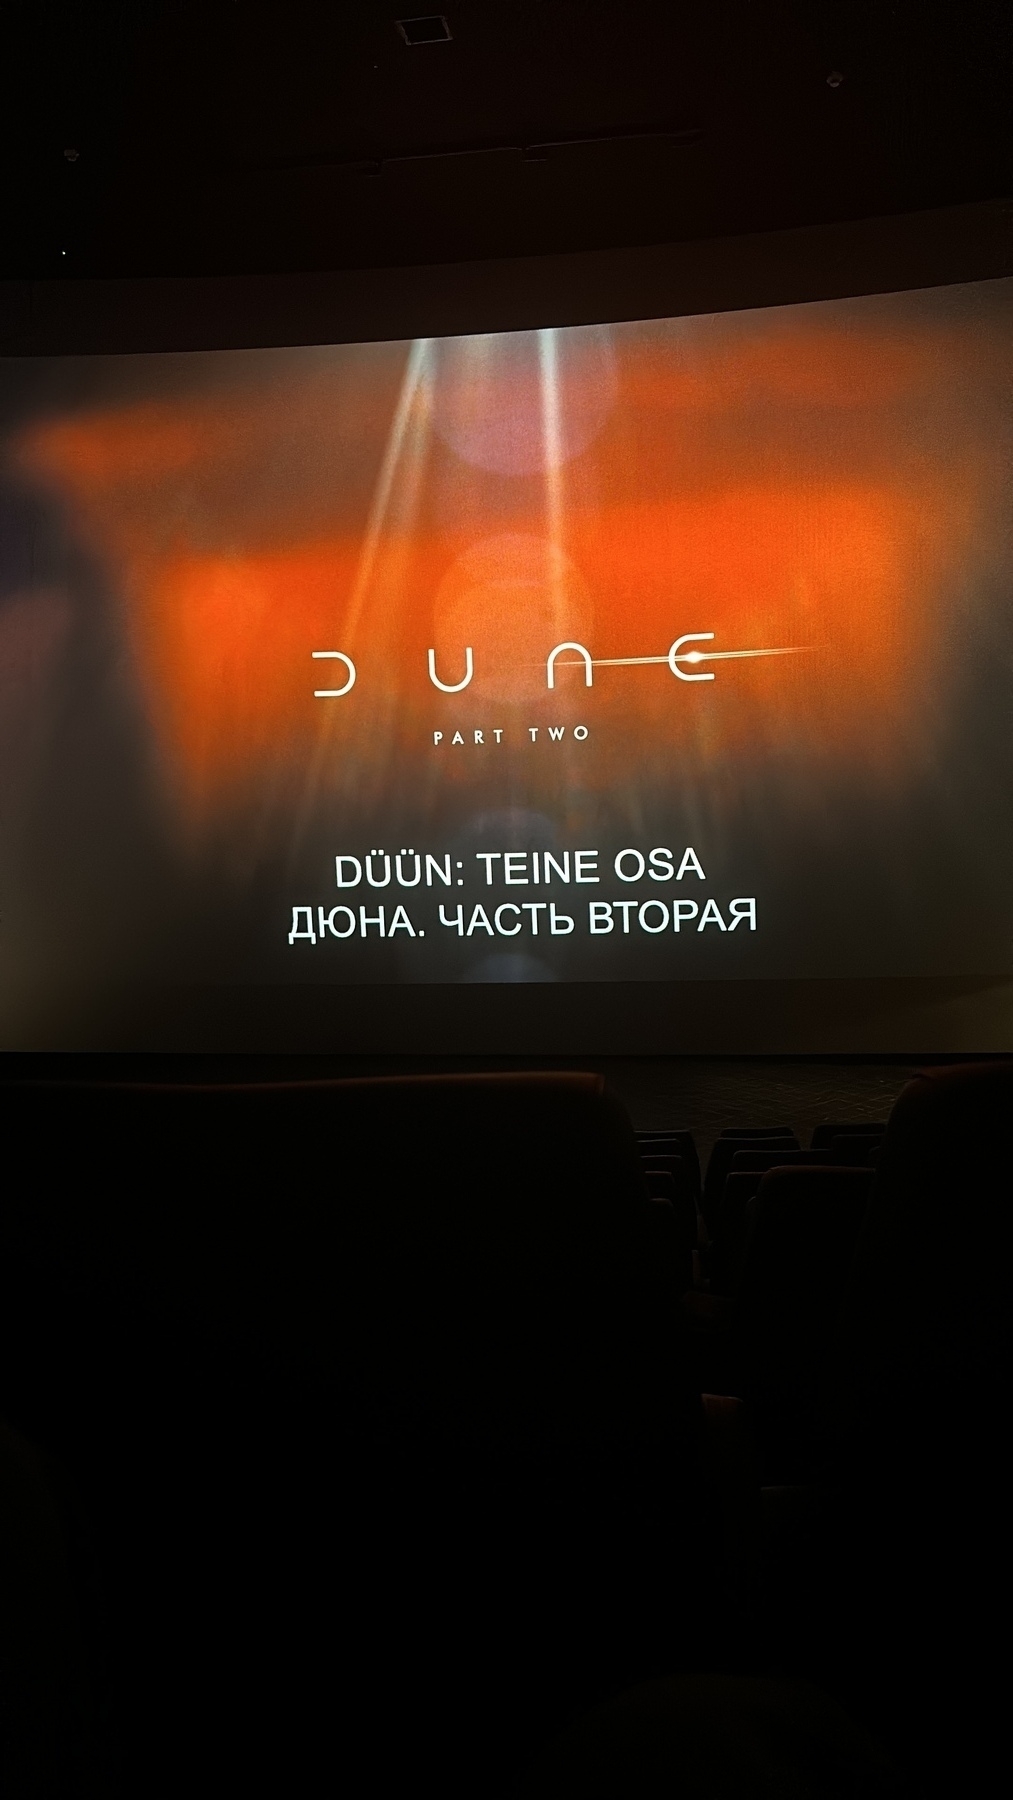 End credits saying Dune II in English, Estonian and Russian